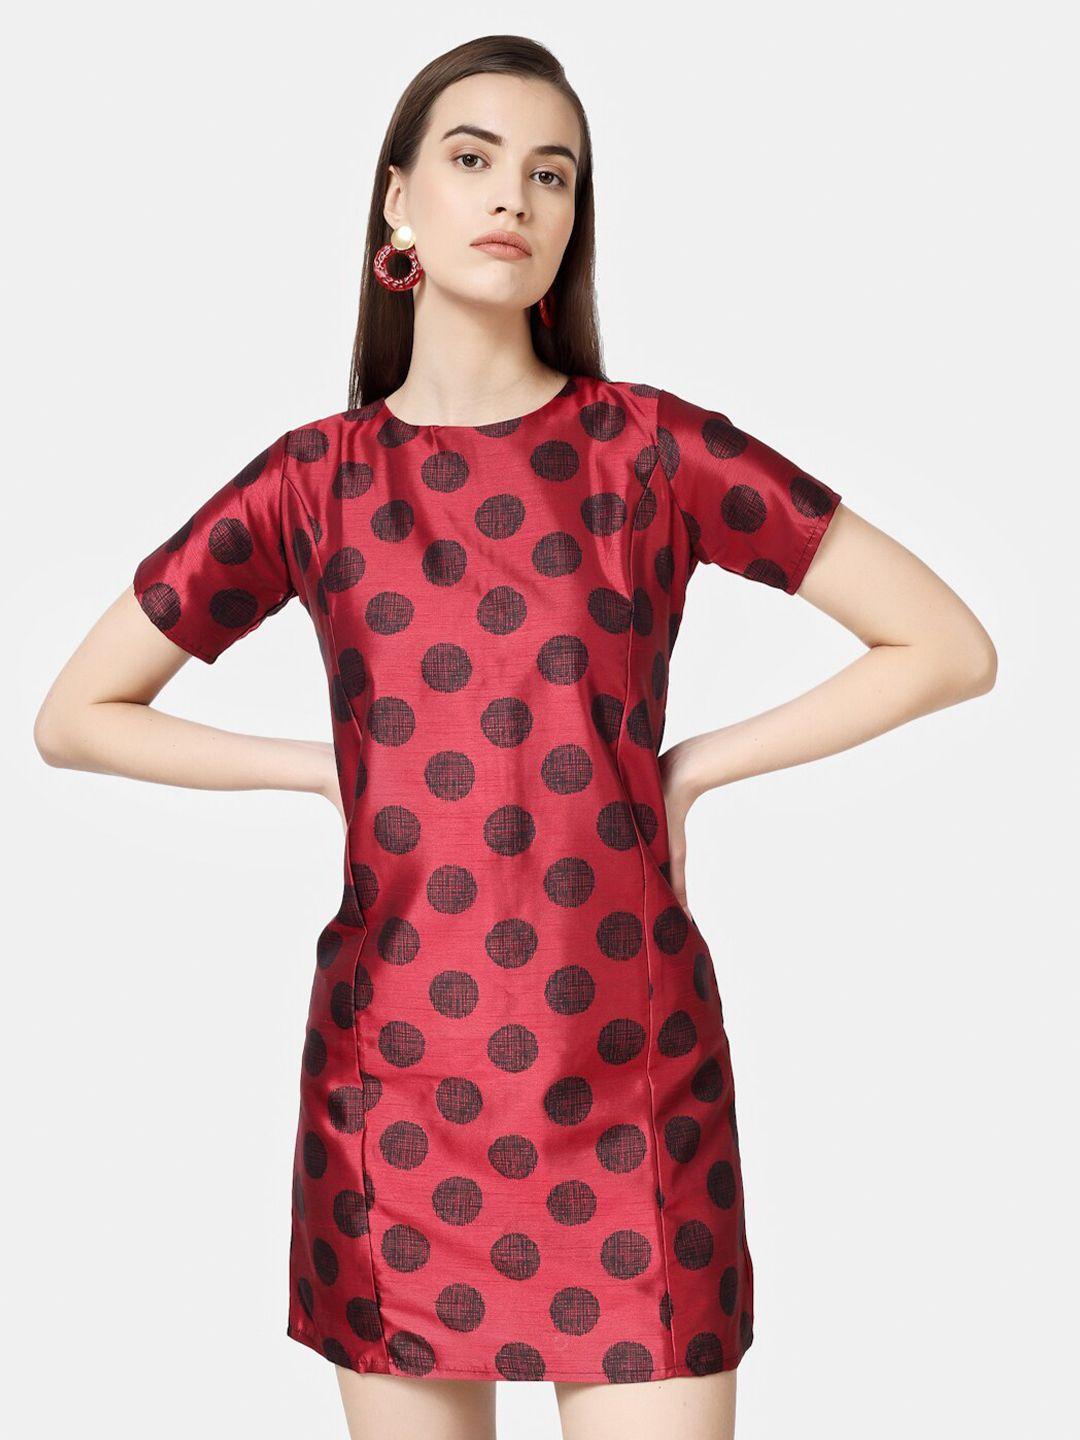 chanira la parezza polka dots printed sheath dress